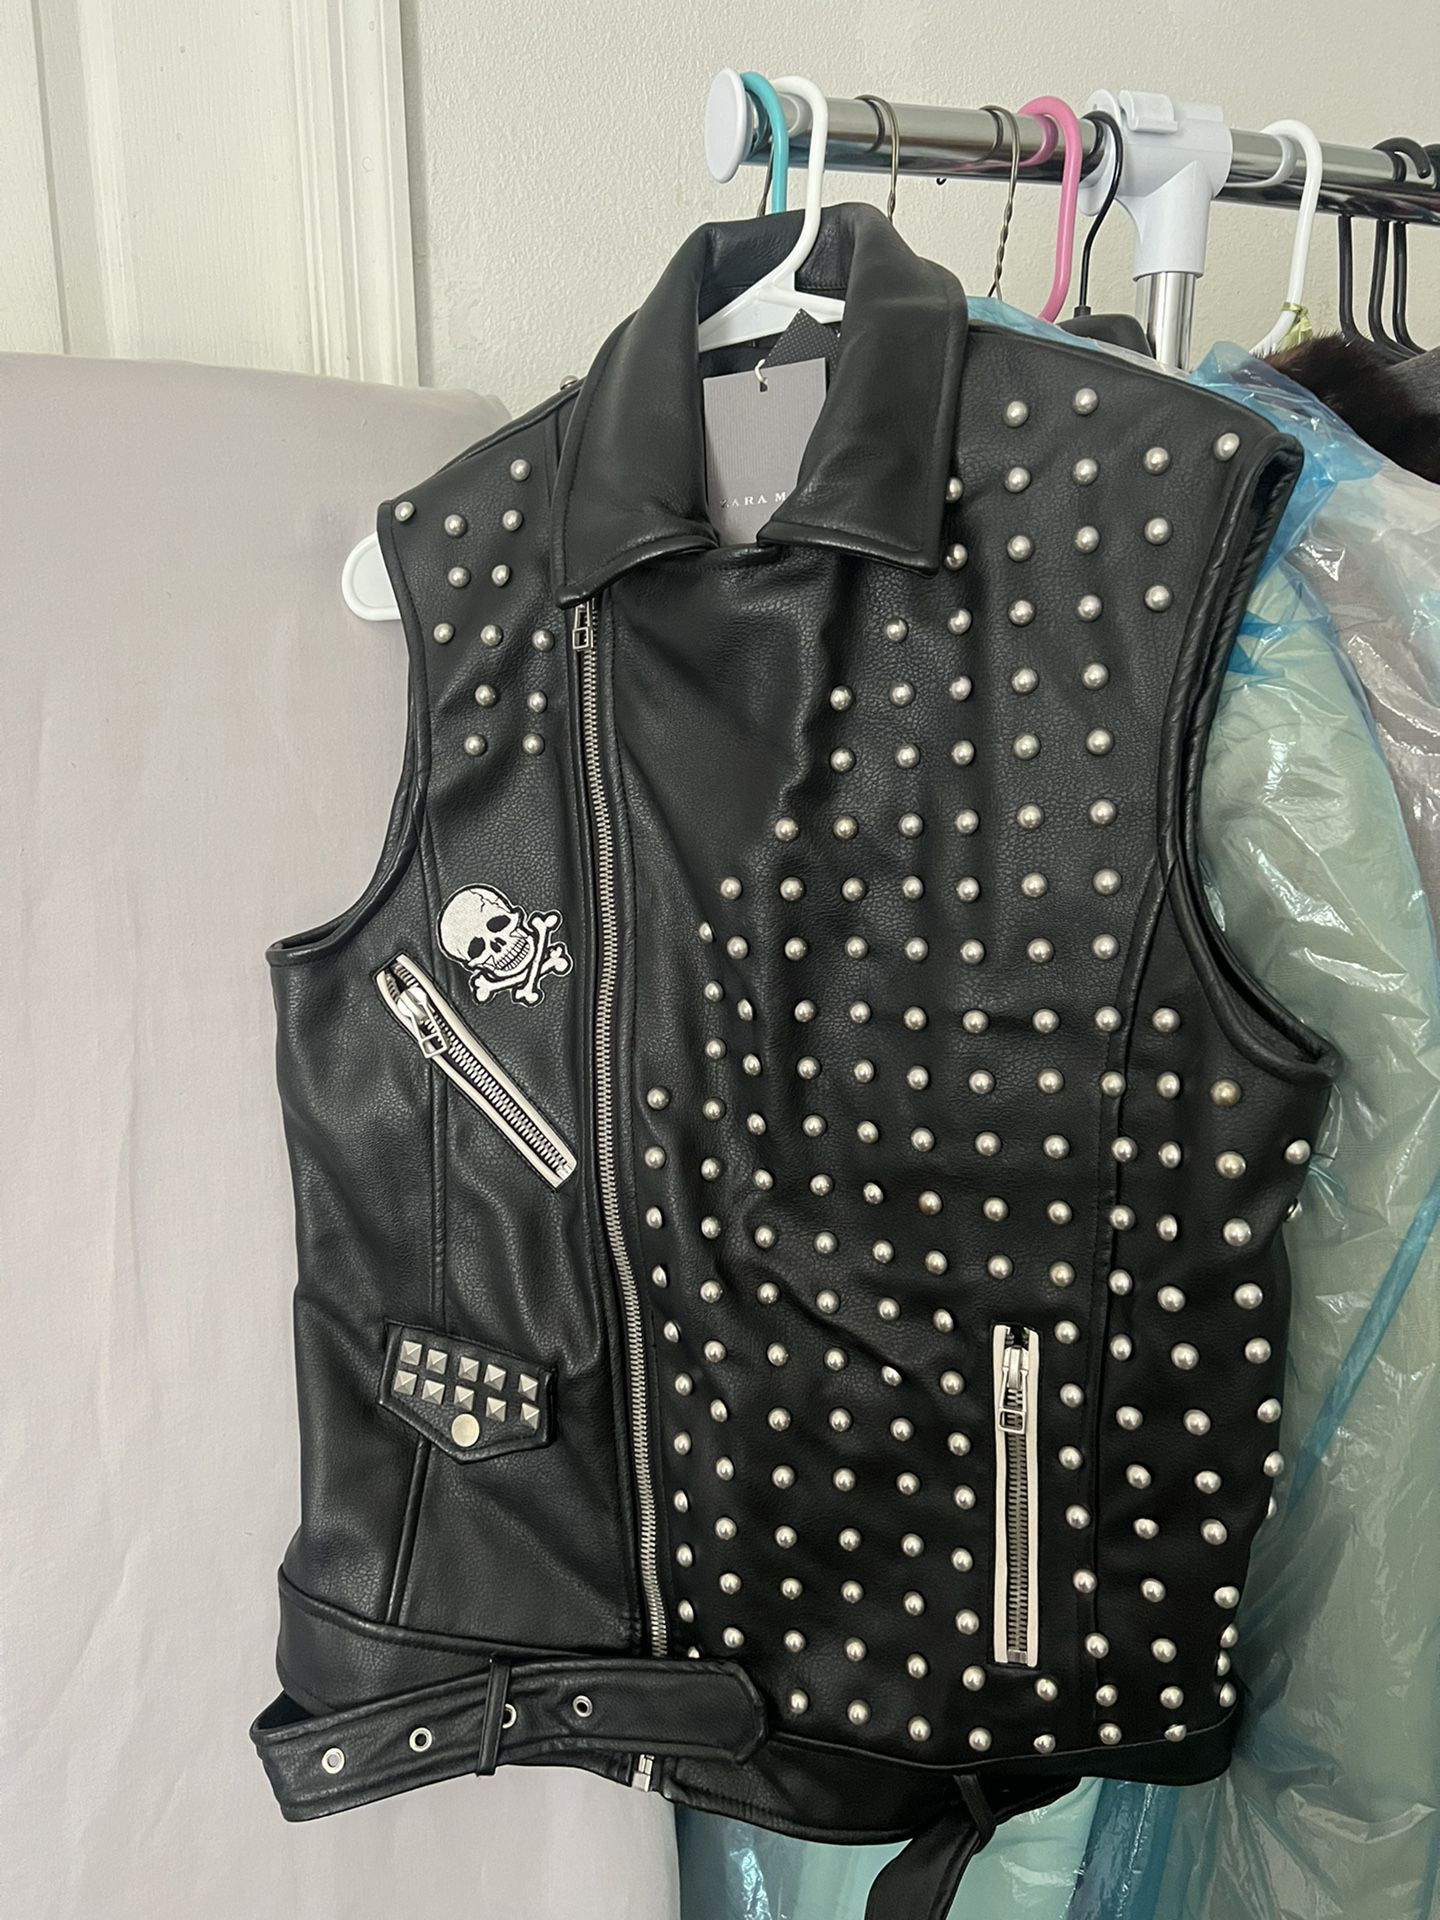 Black Leather Vest “Zara” (Brand New)